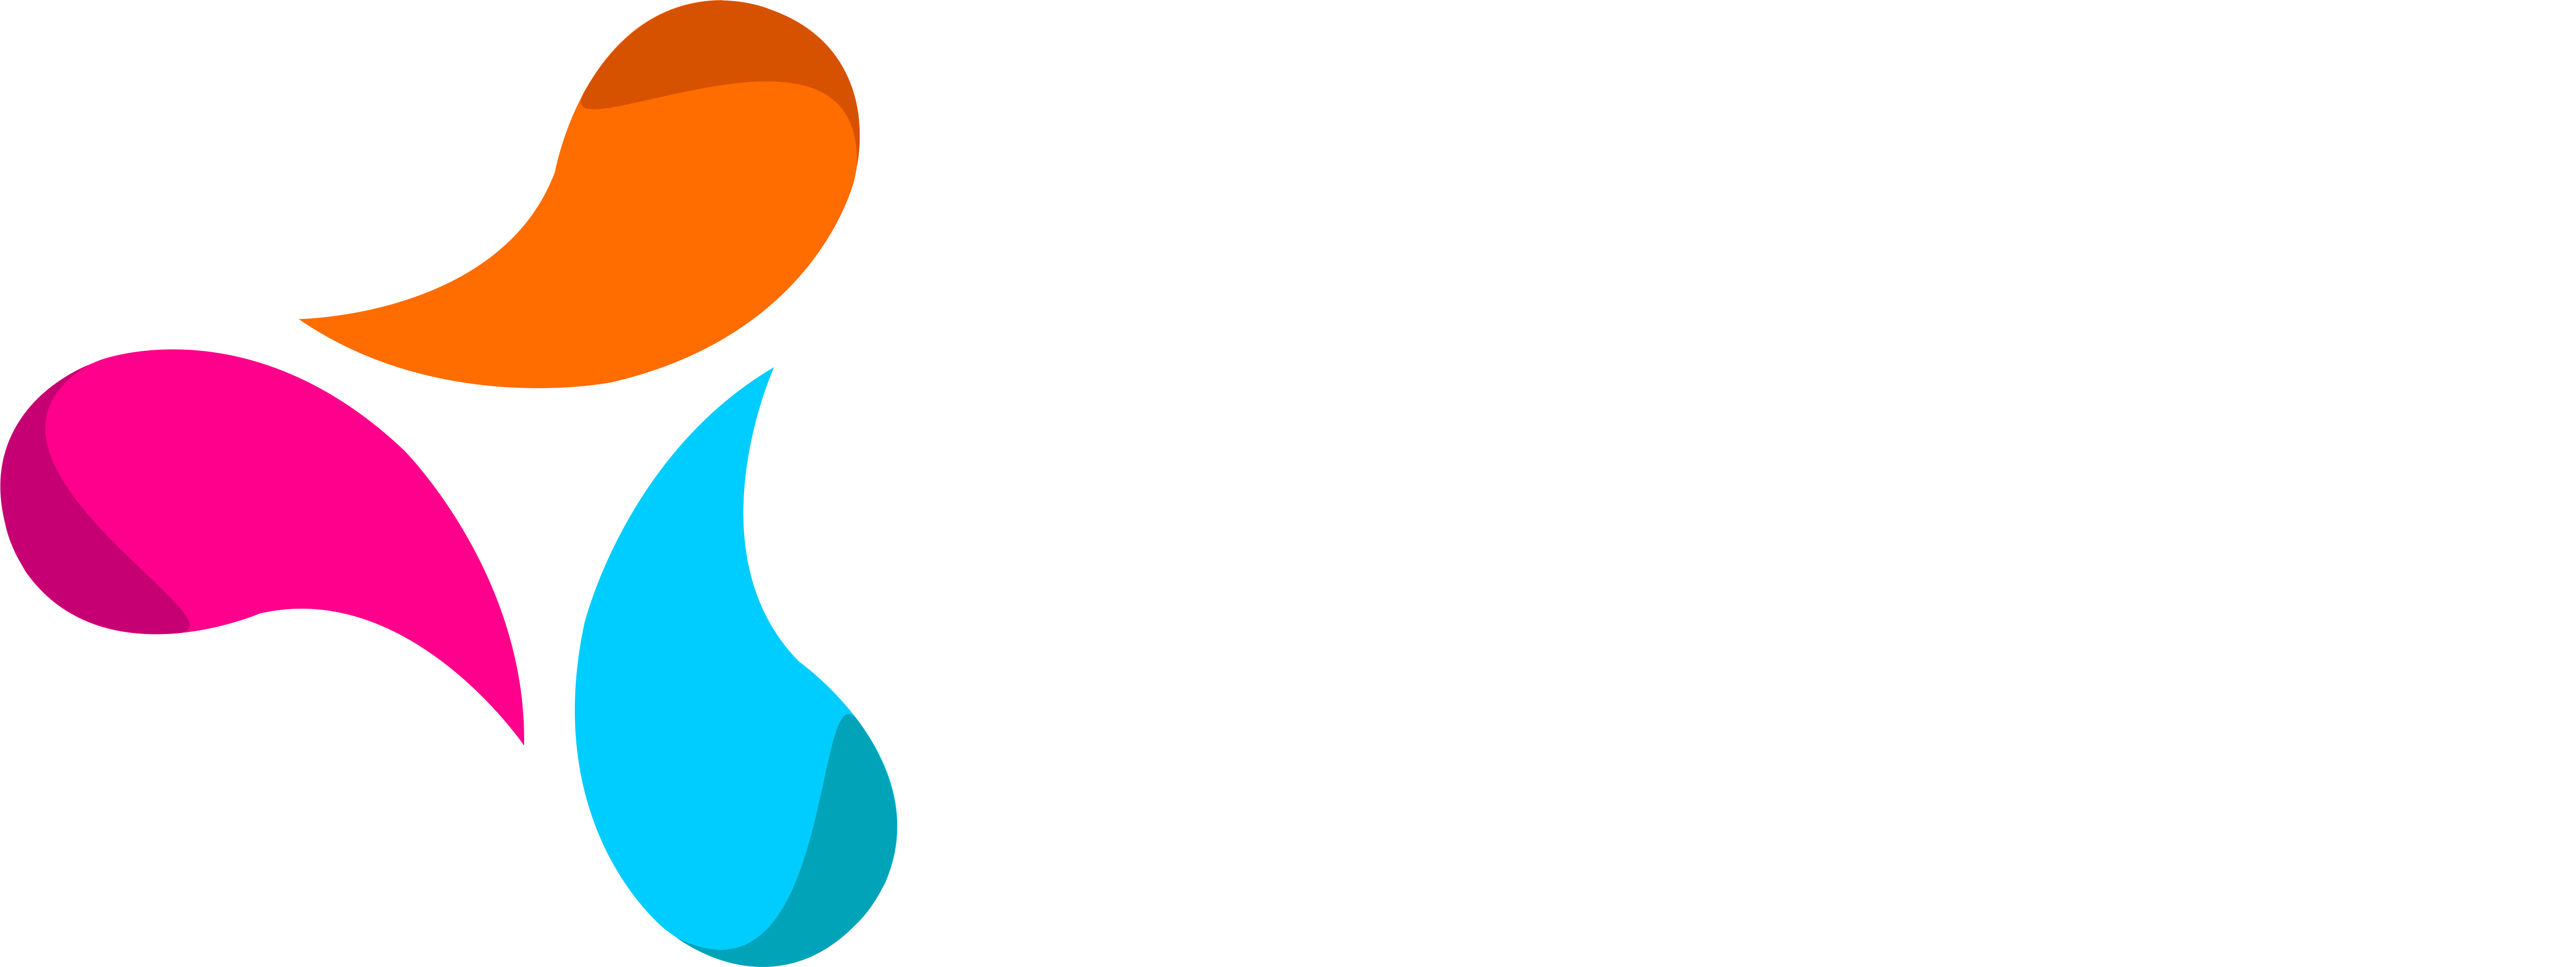 Enjify